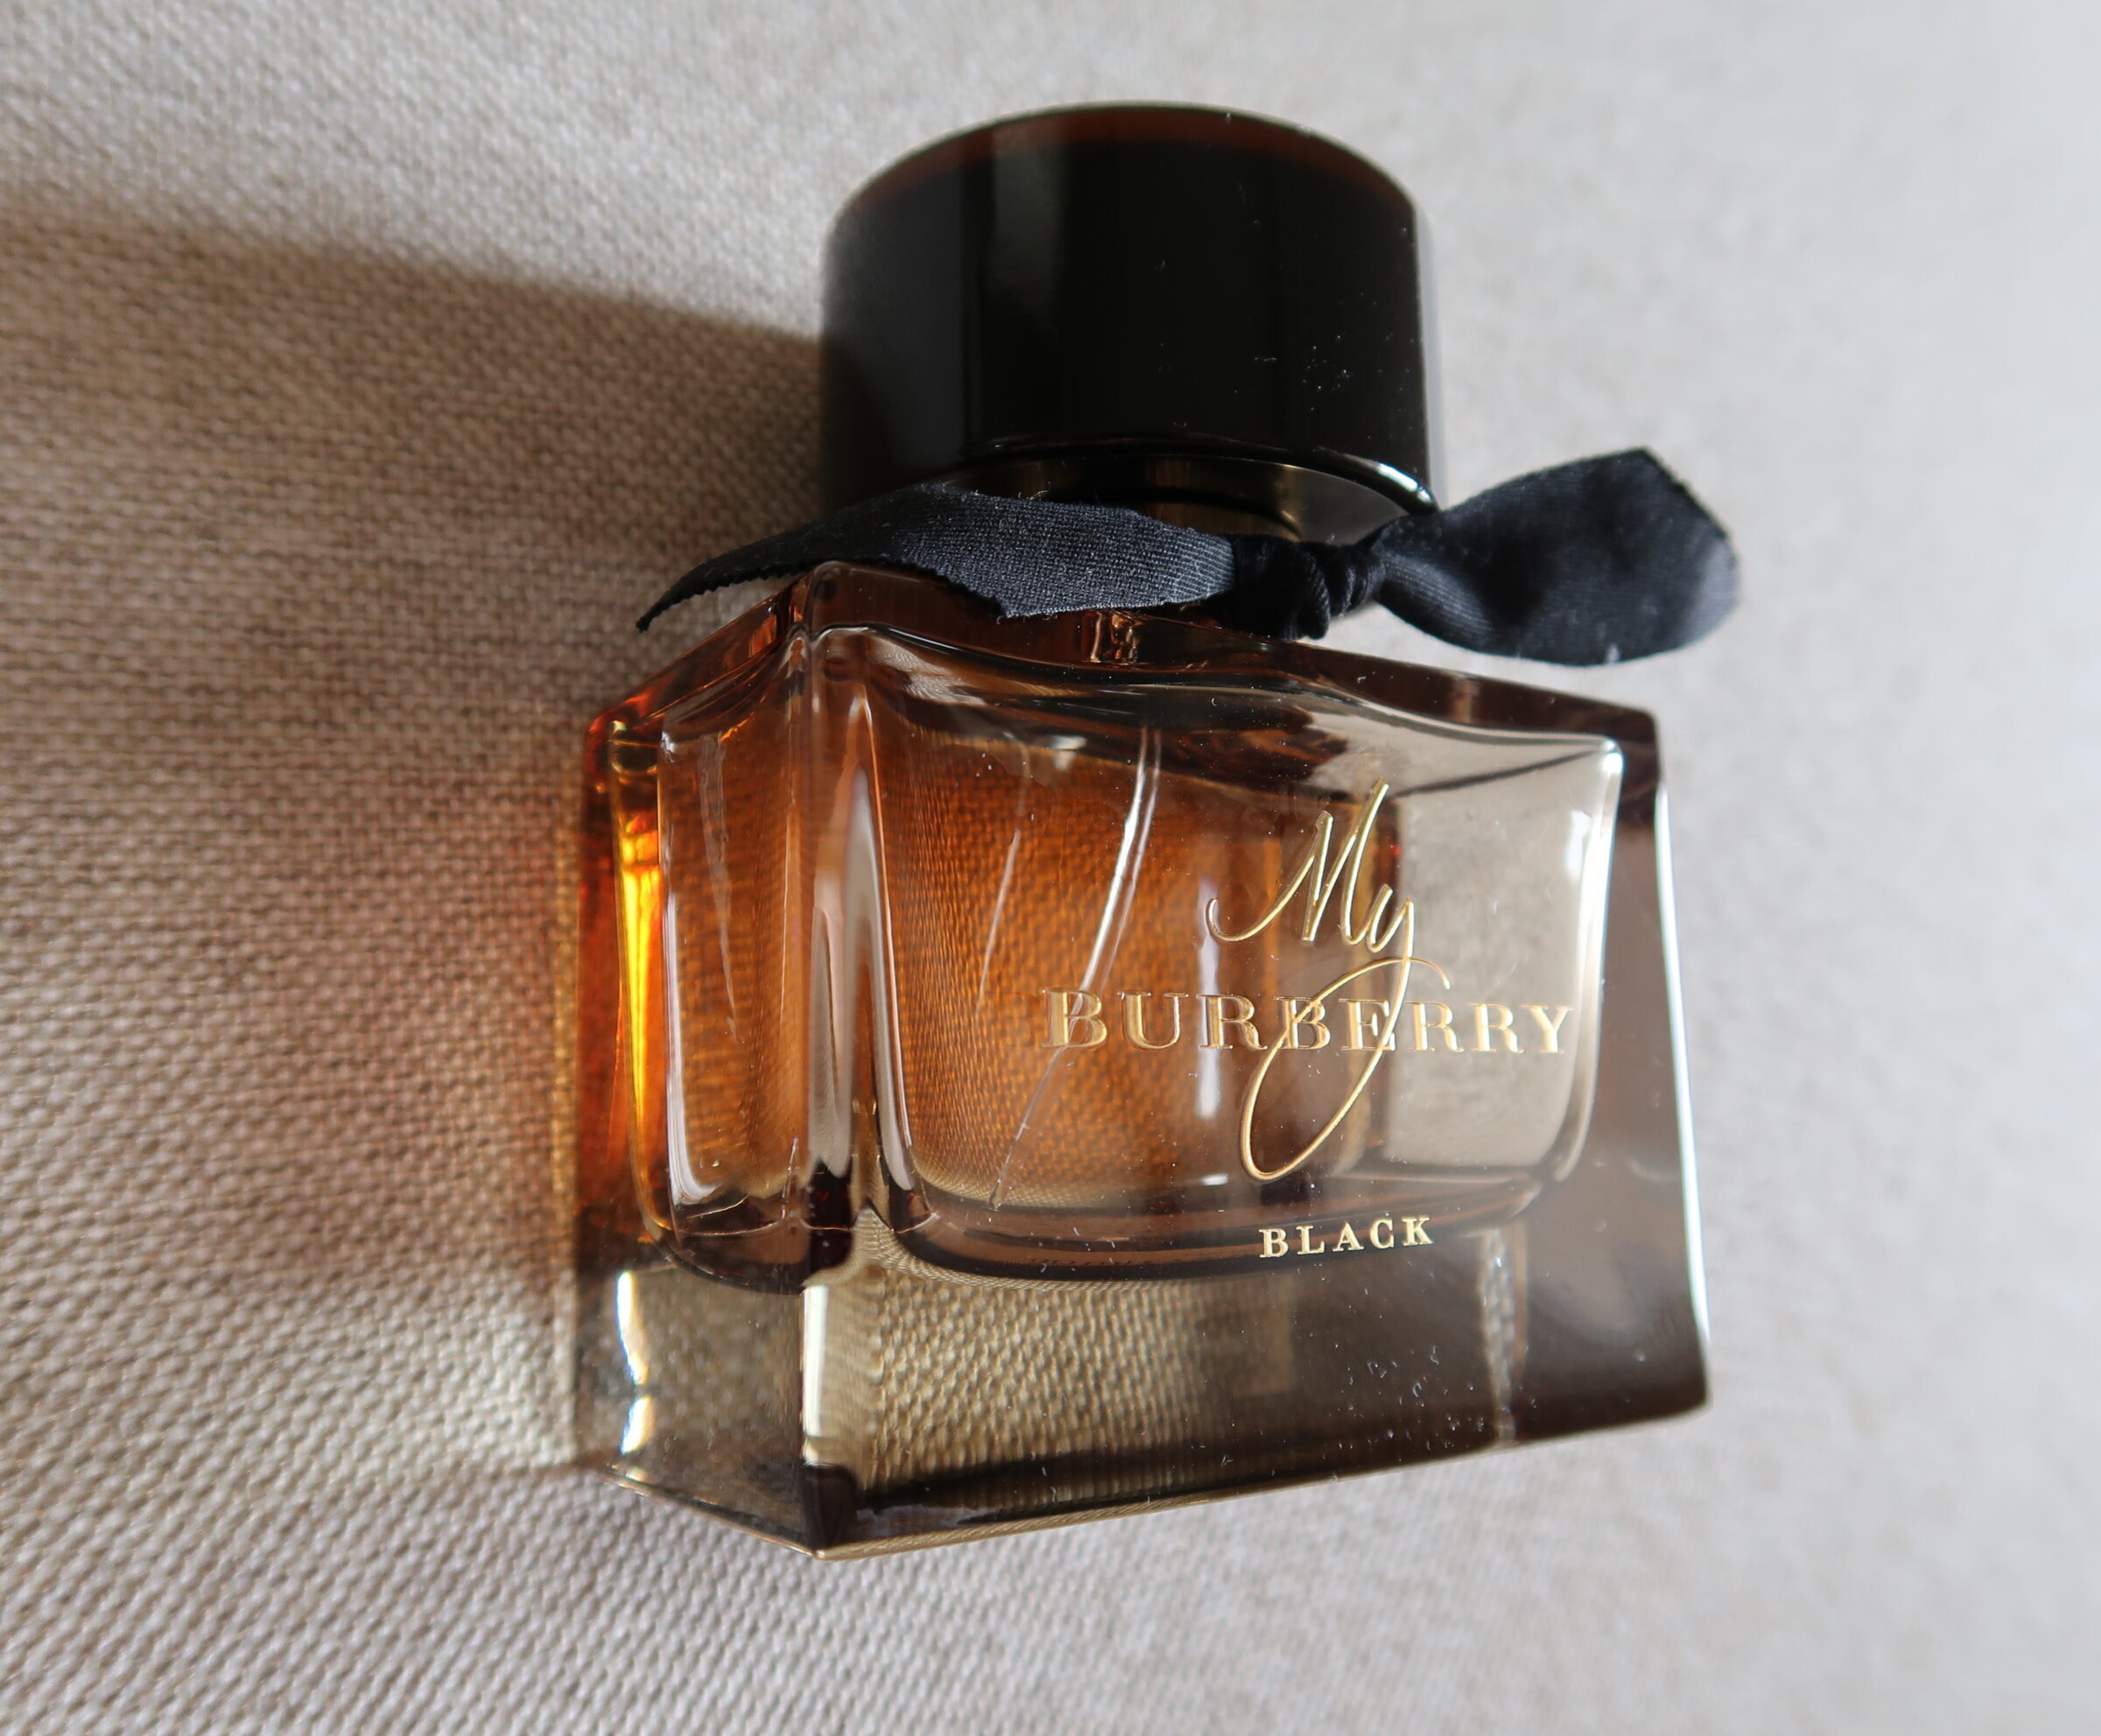 My Burberry Black Perfume Review - Charm Of Trip